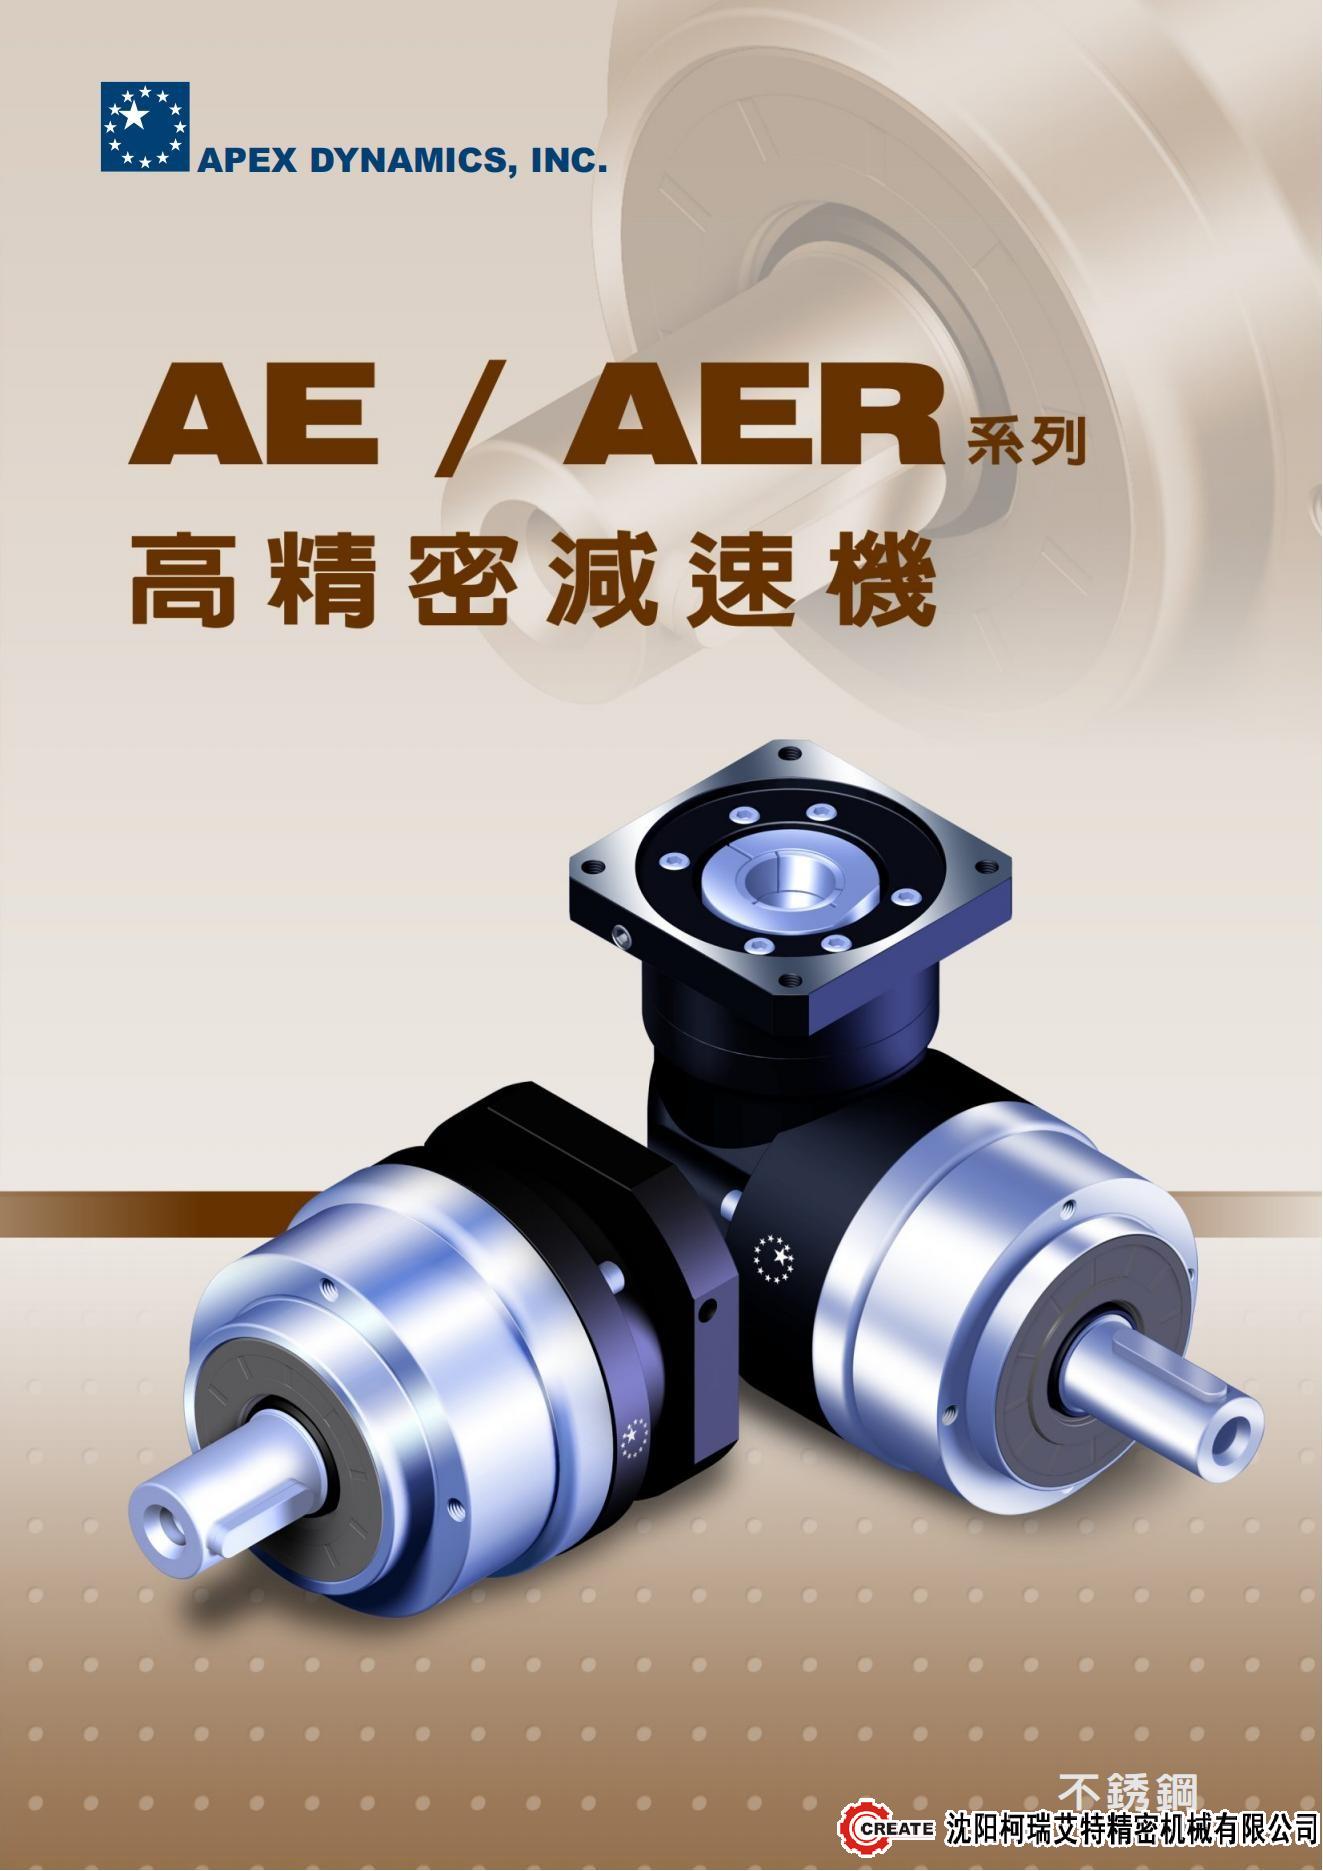 AE系列 AER系列-轴输出 斜齿 经济型-APEX精锐行星减速机